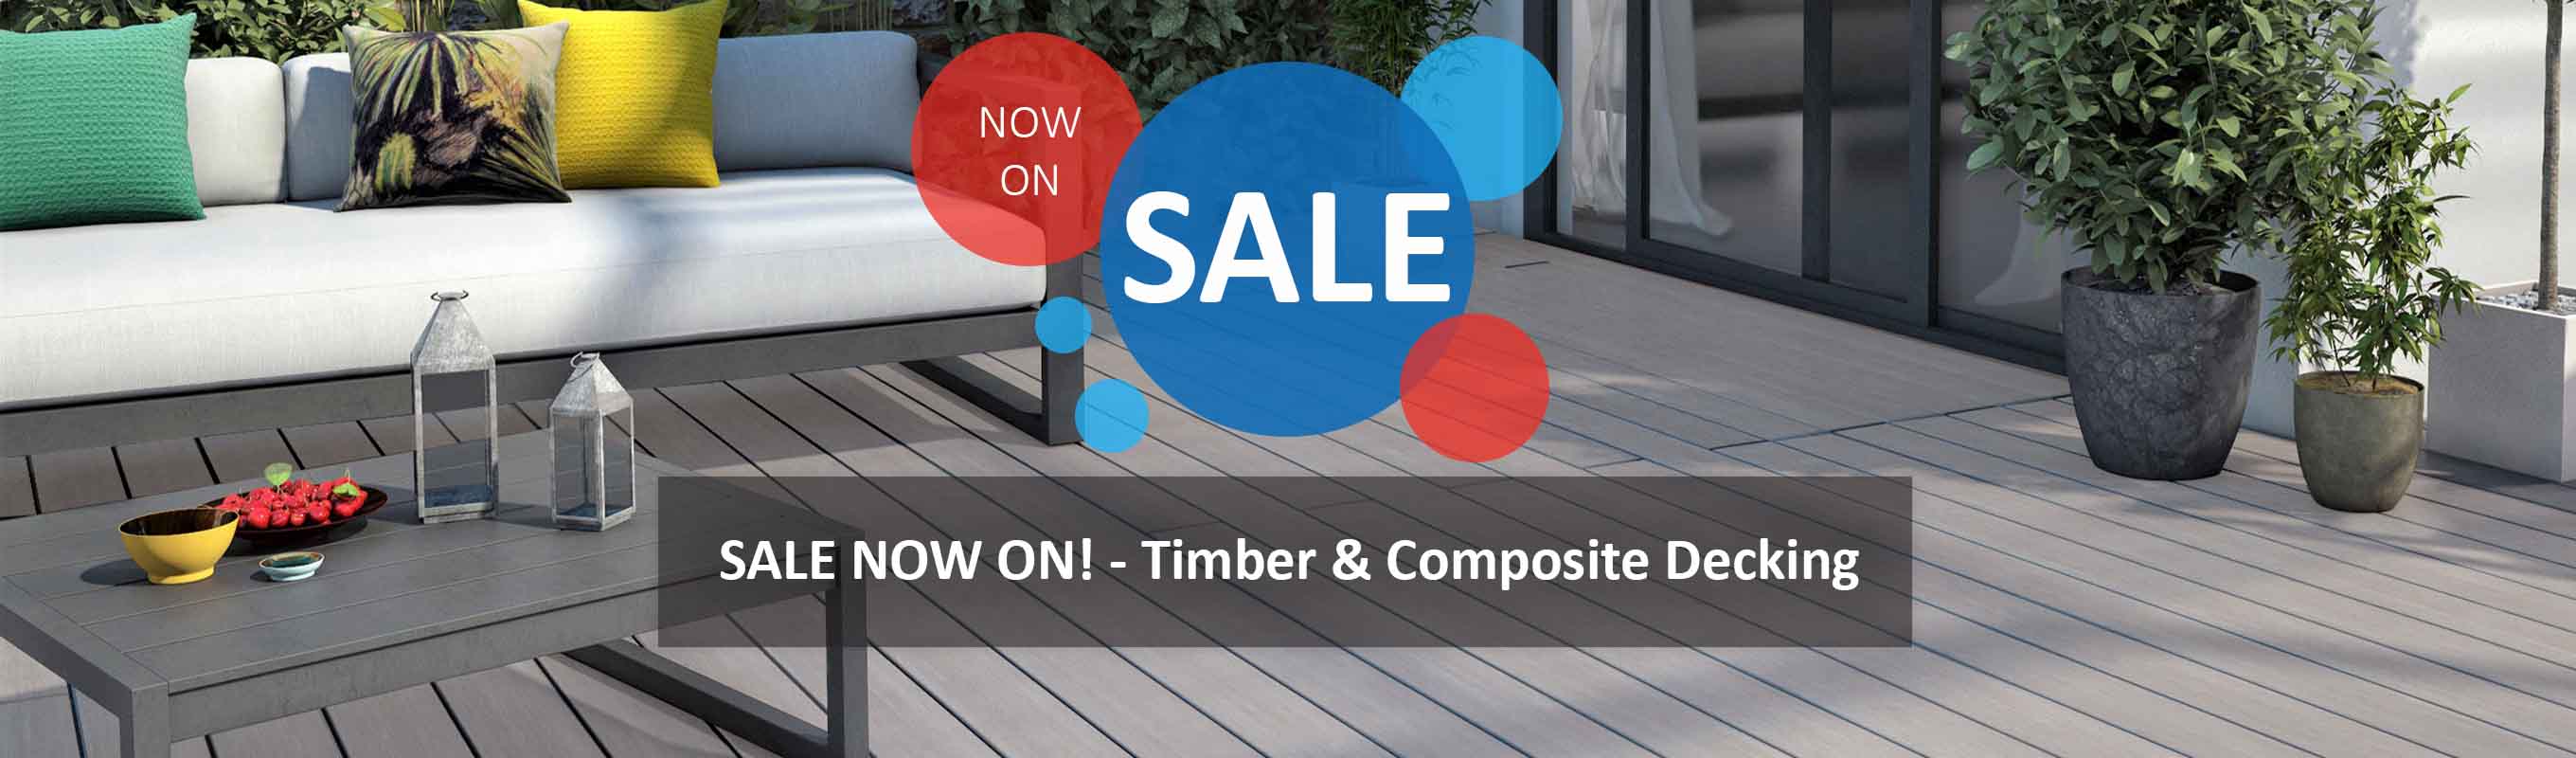 Noyeks - Timber & Composite Decking